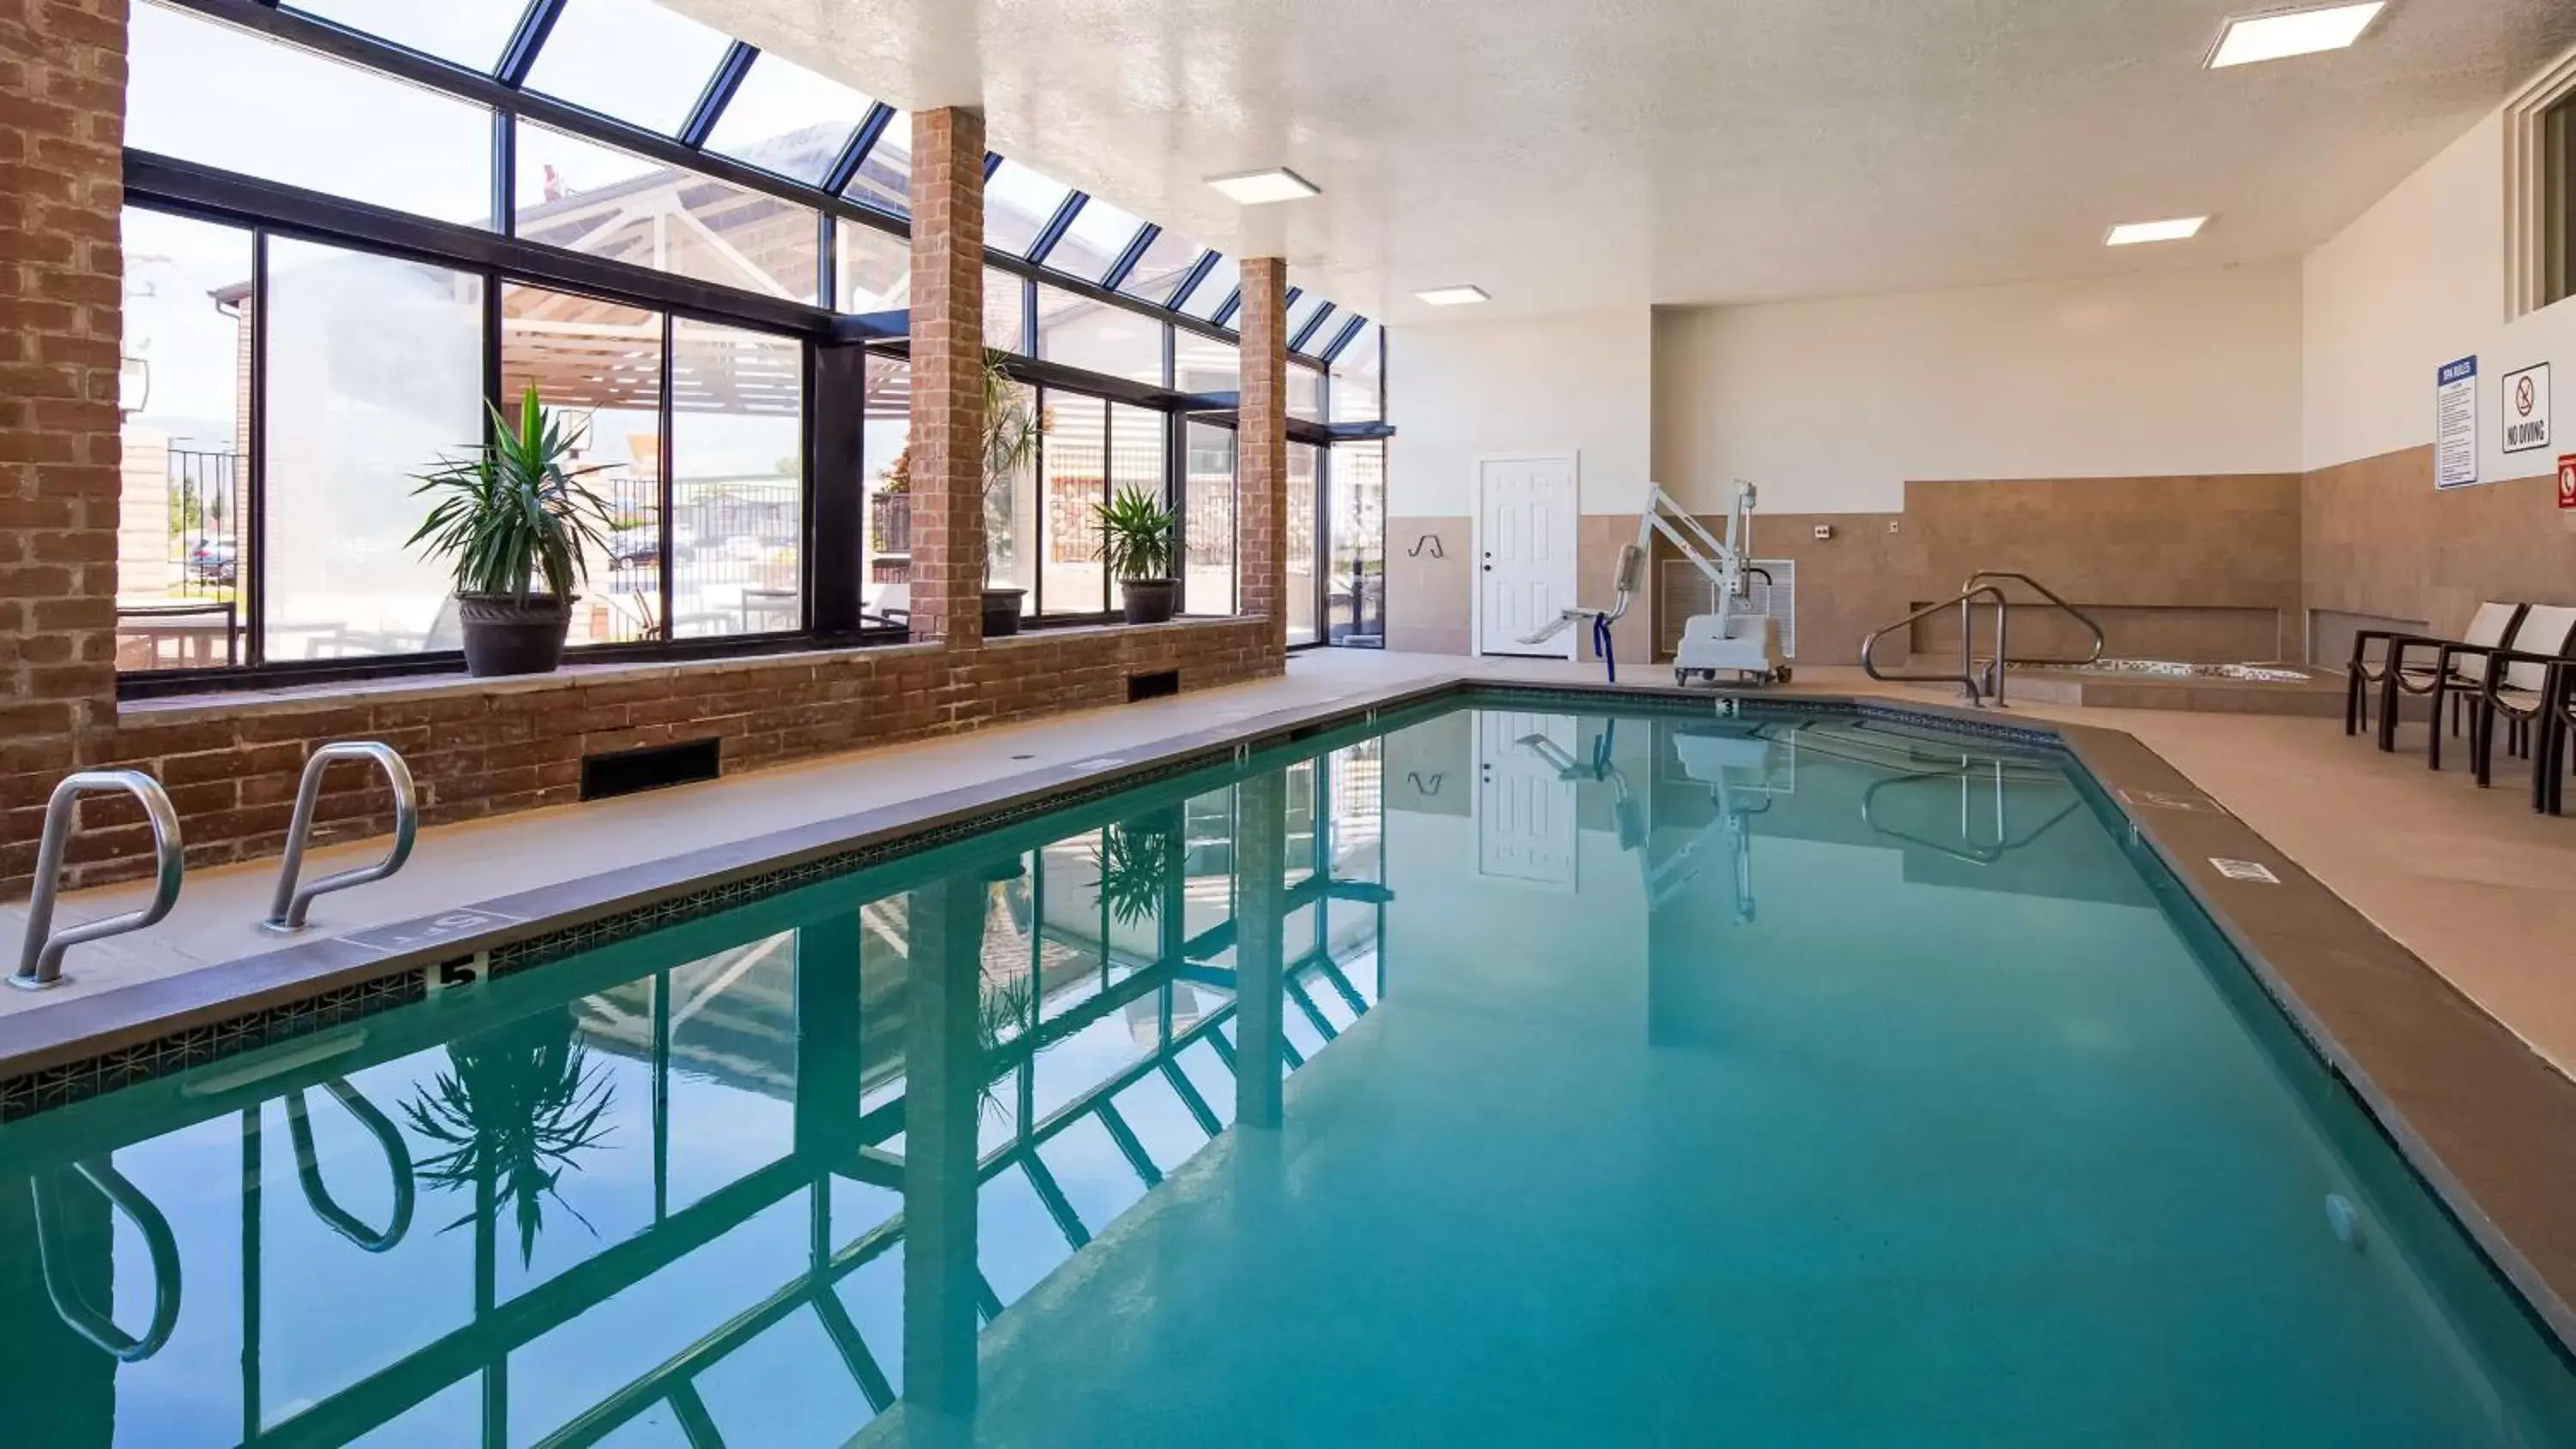 On site, Swimming Pool in Best Western PLUS Cotton Tree Inn